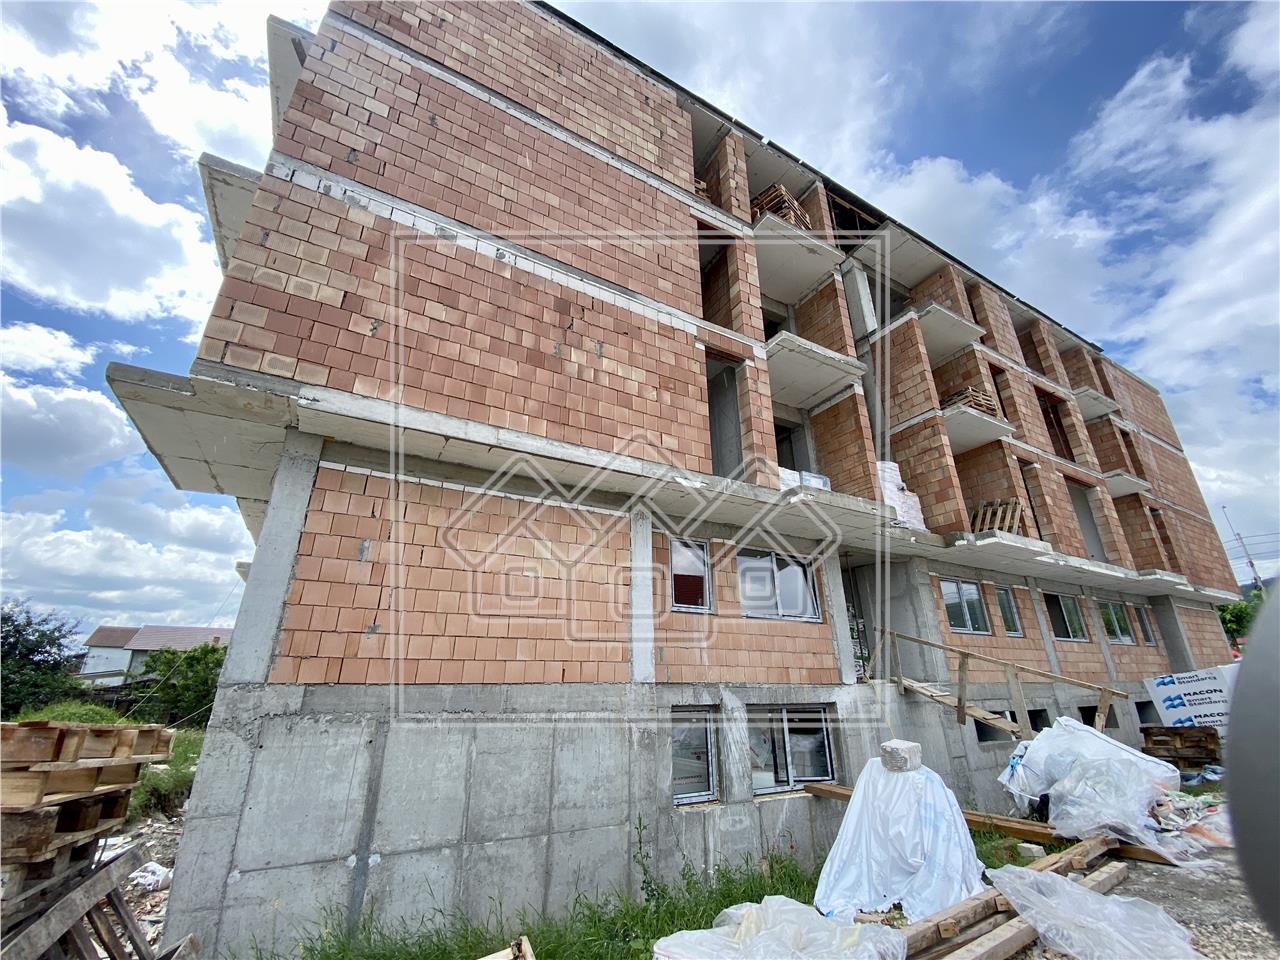 Apartament de vanzare in Alba Iulia - finisat la cheie - boxa